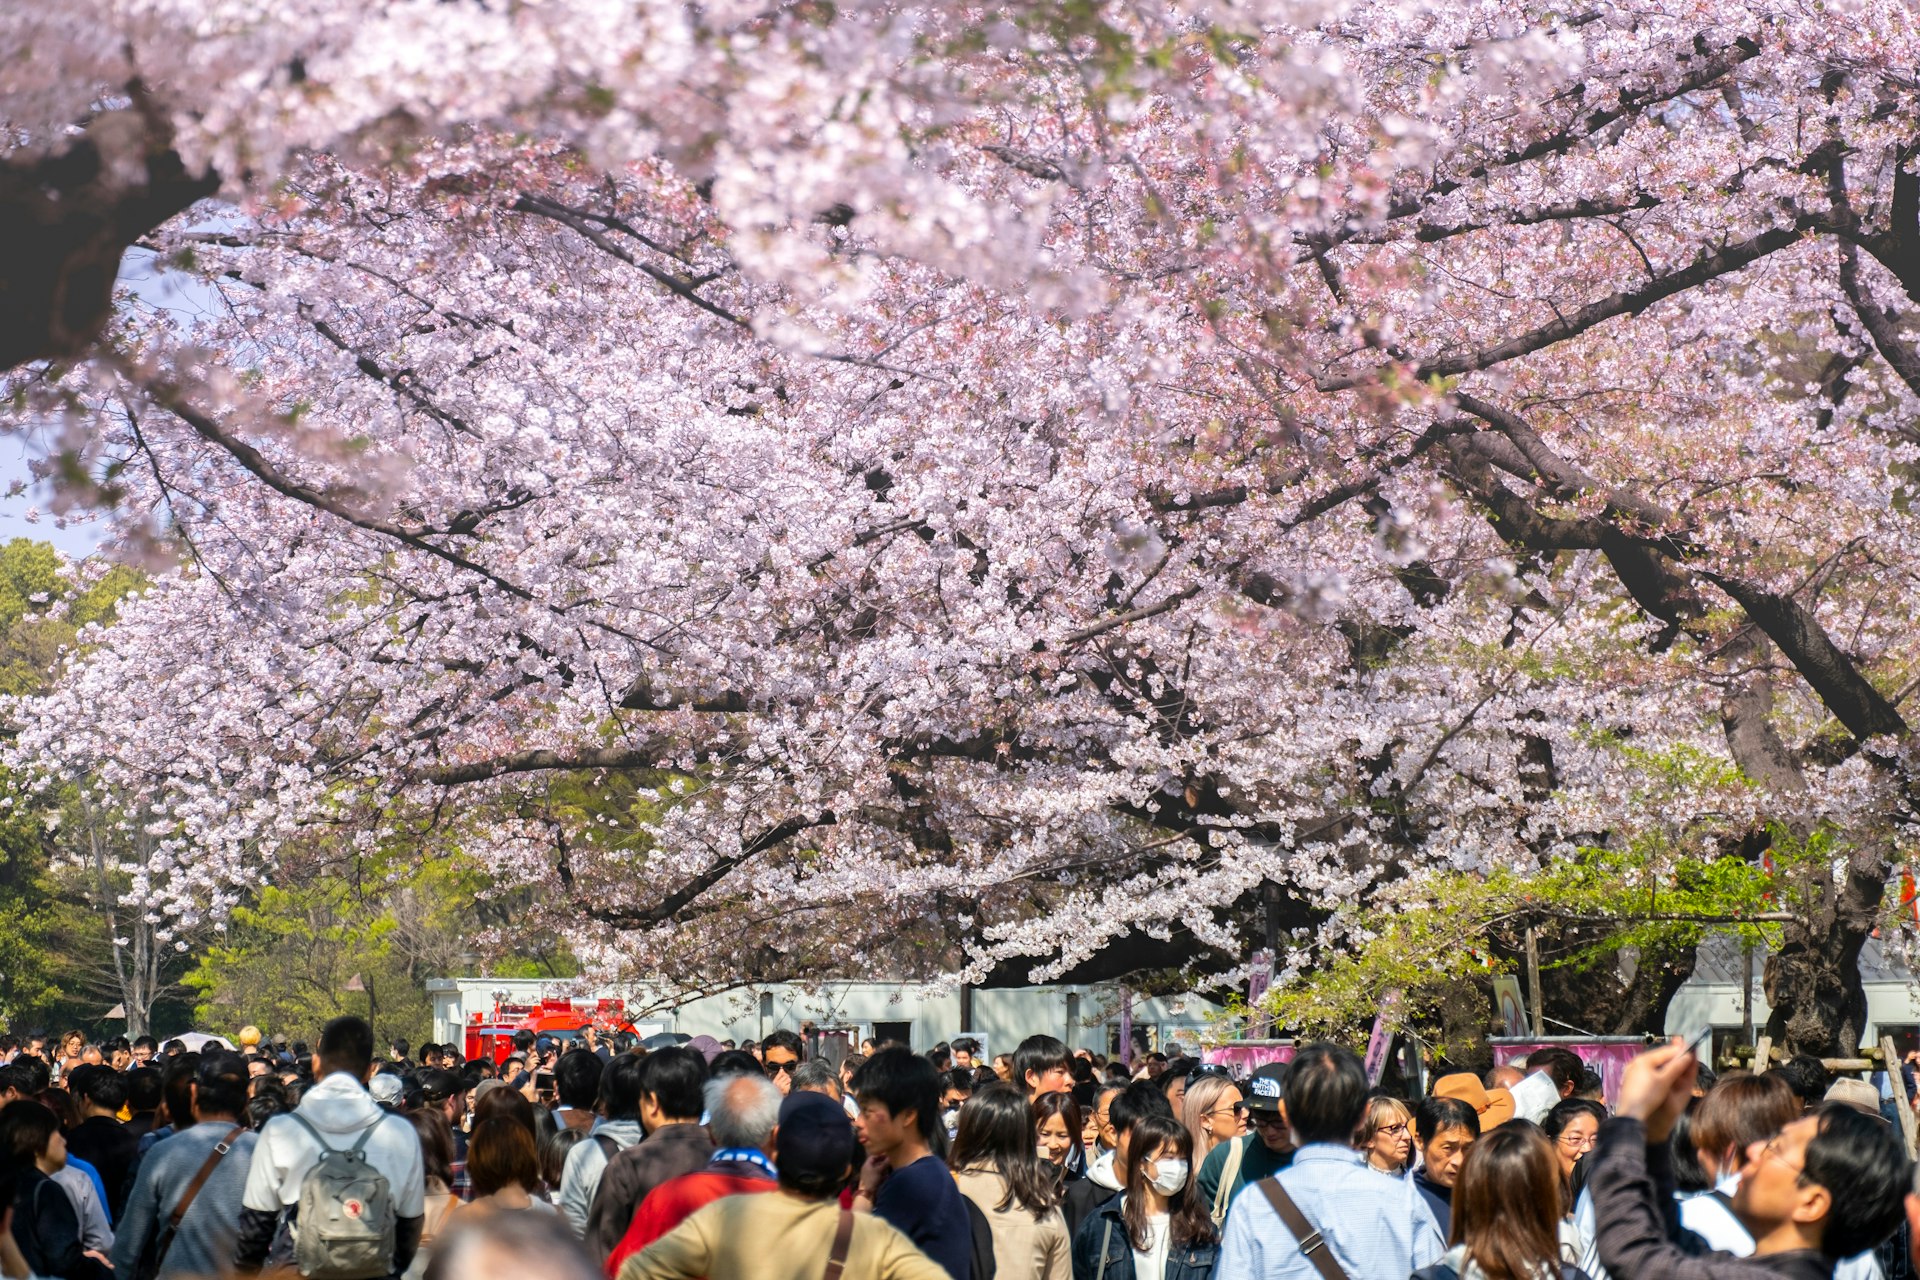 Crowds during cherry blossom season